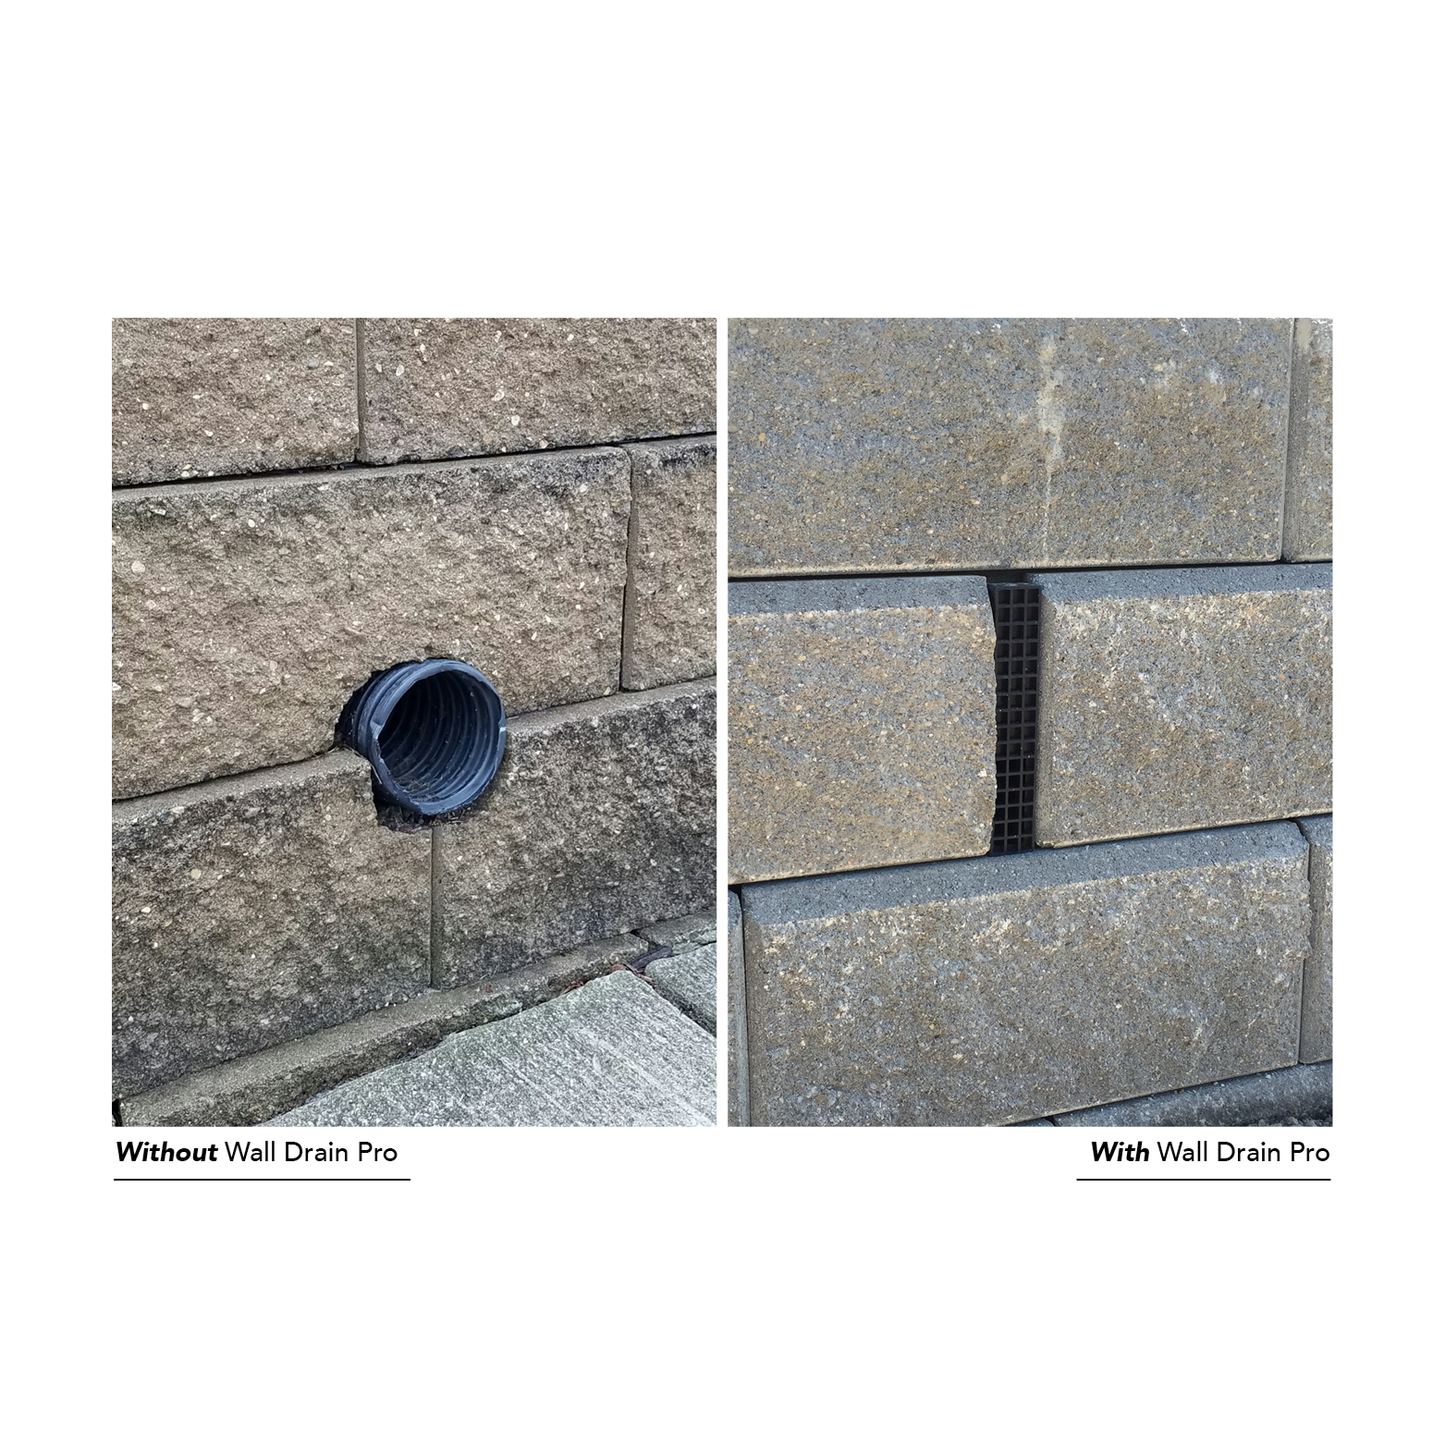 bad retaining wall drain versus hidden wall drain